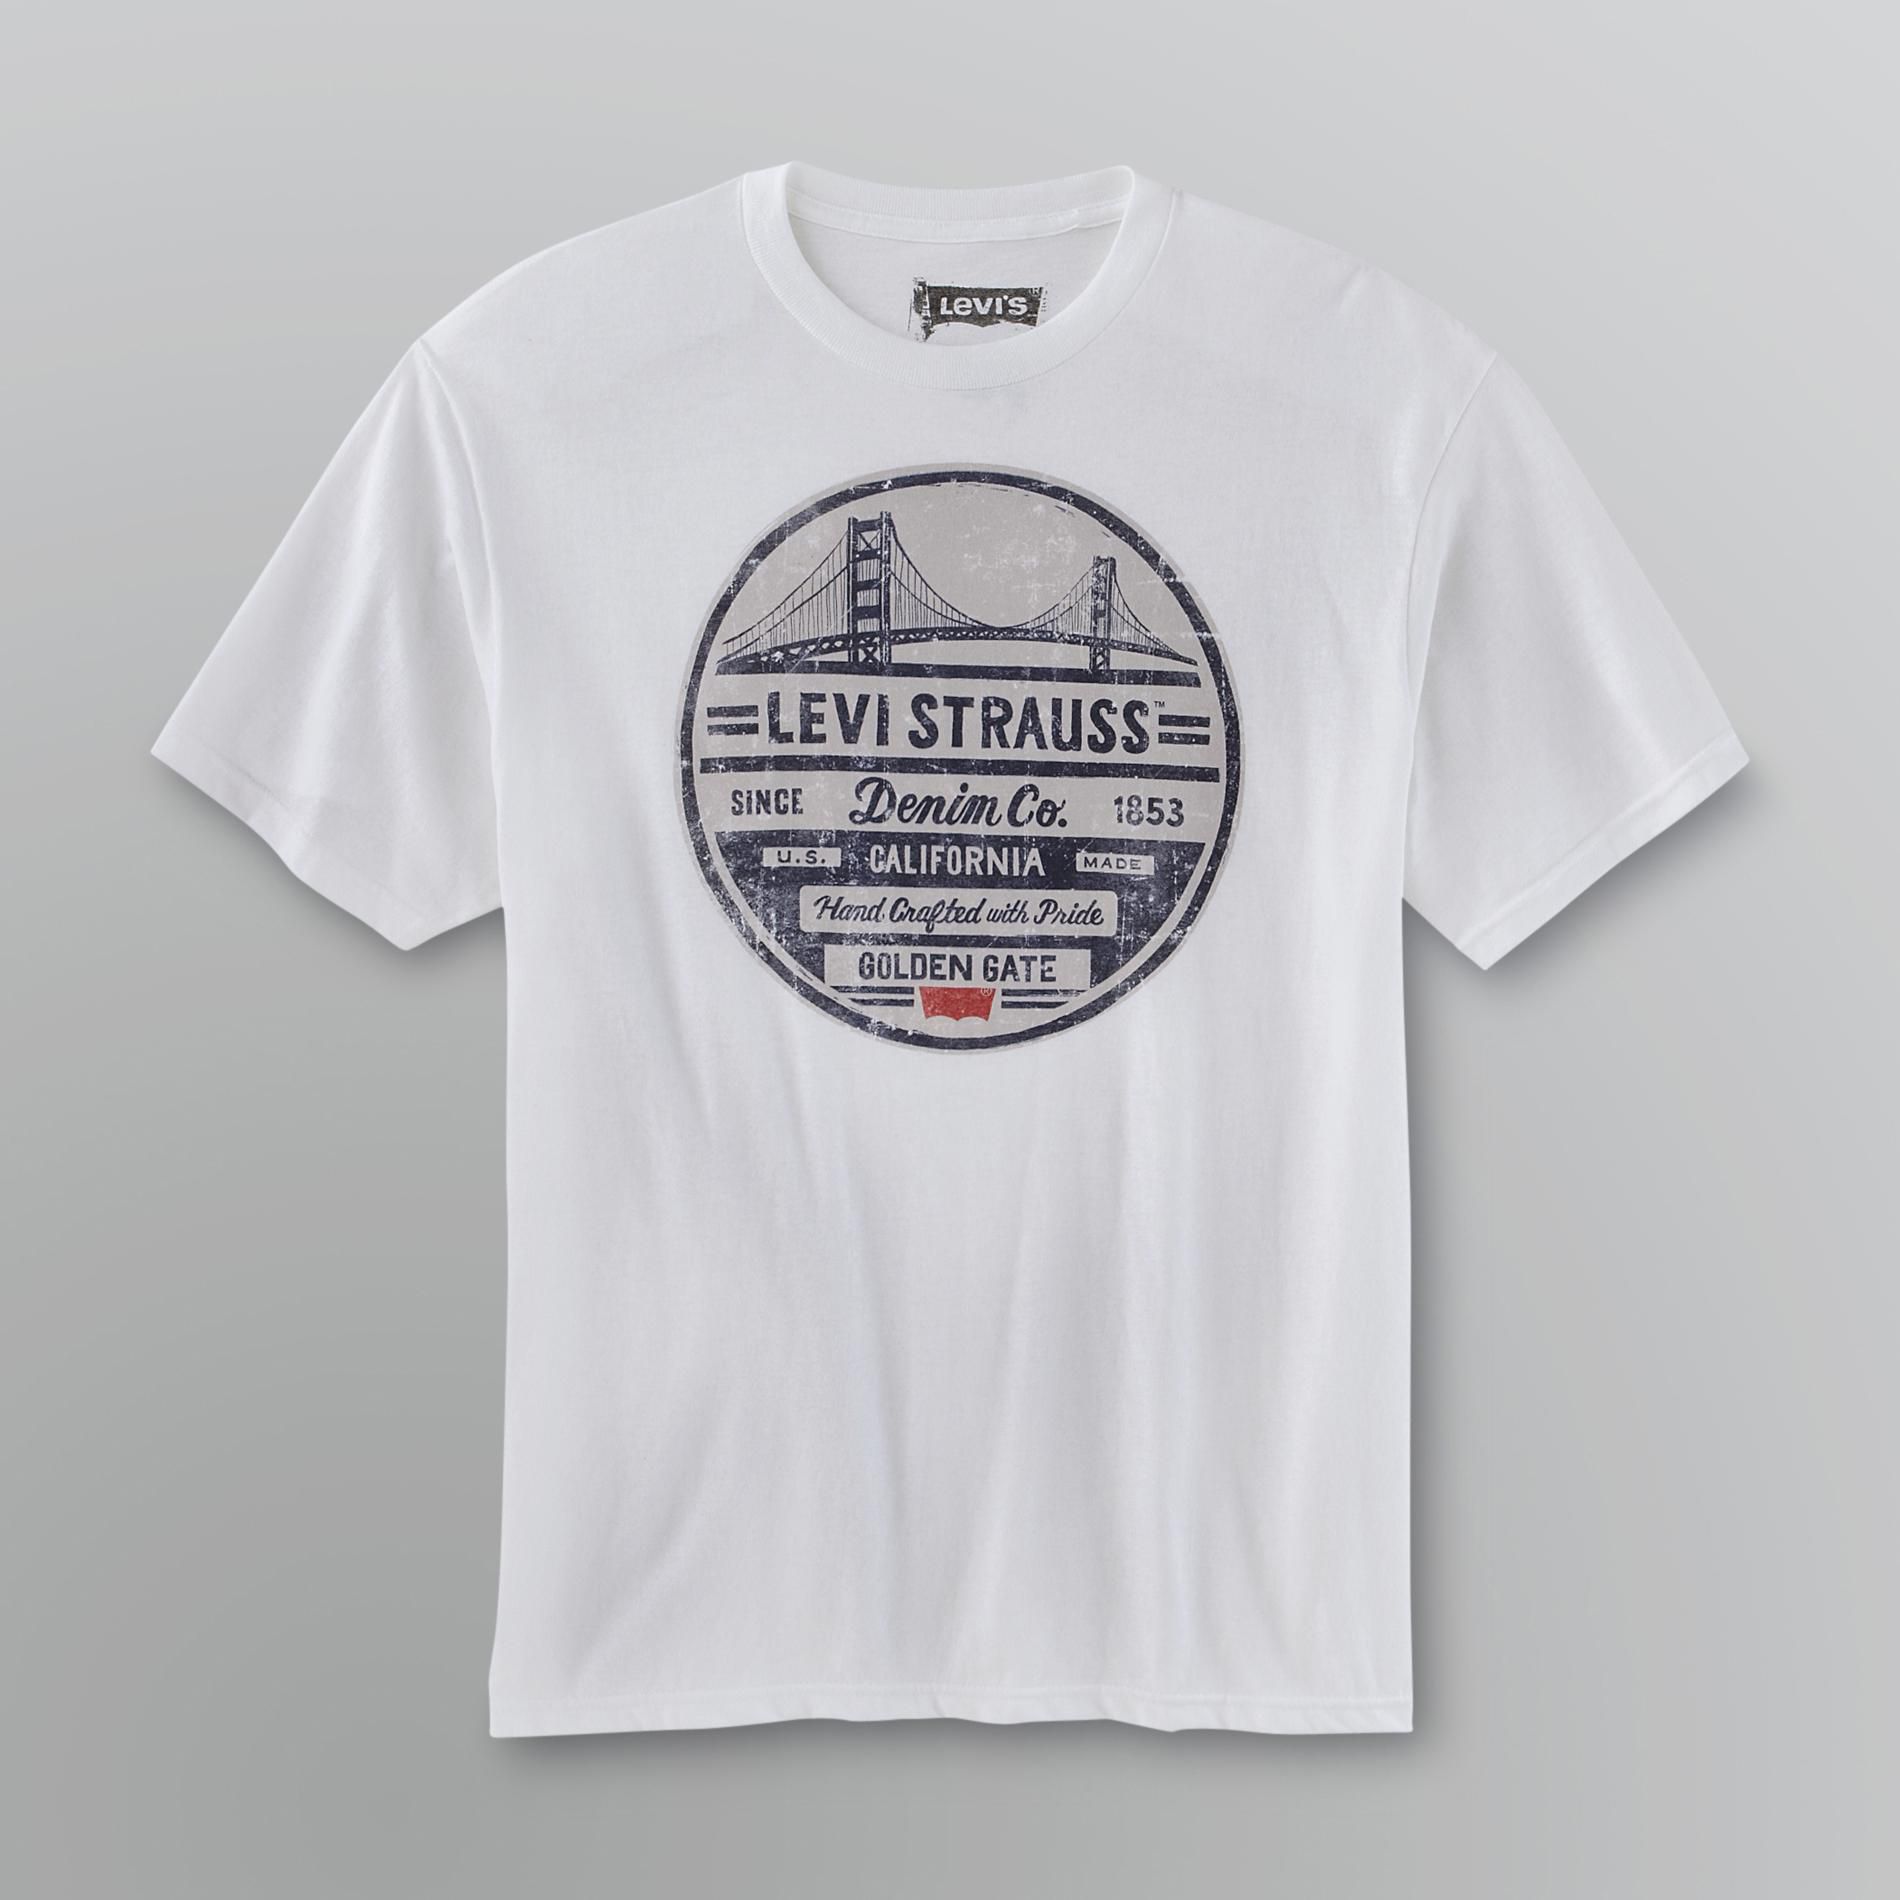 Levi's Men's Graphic T-Shirt - Bridge